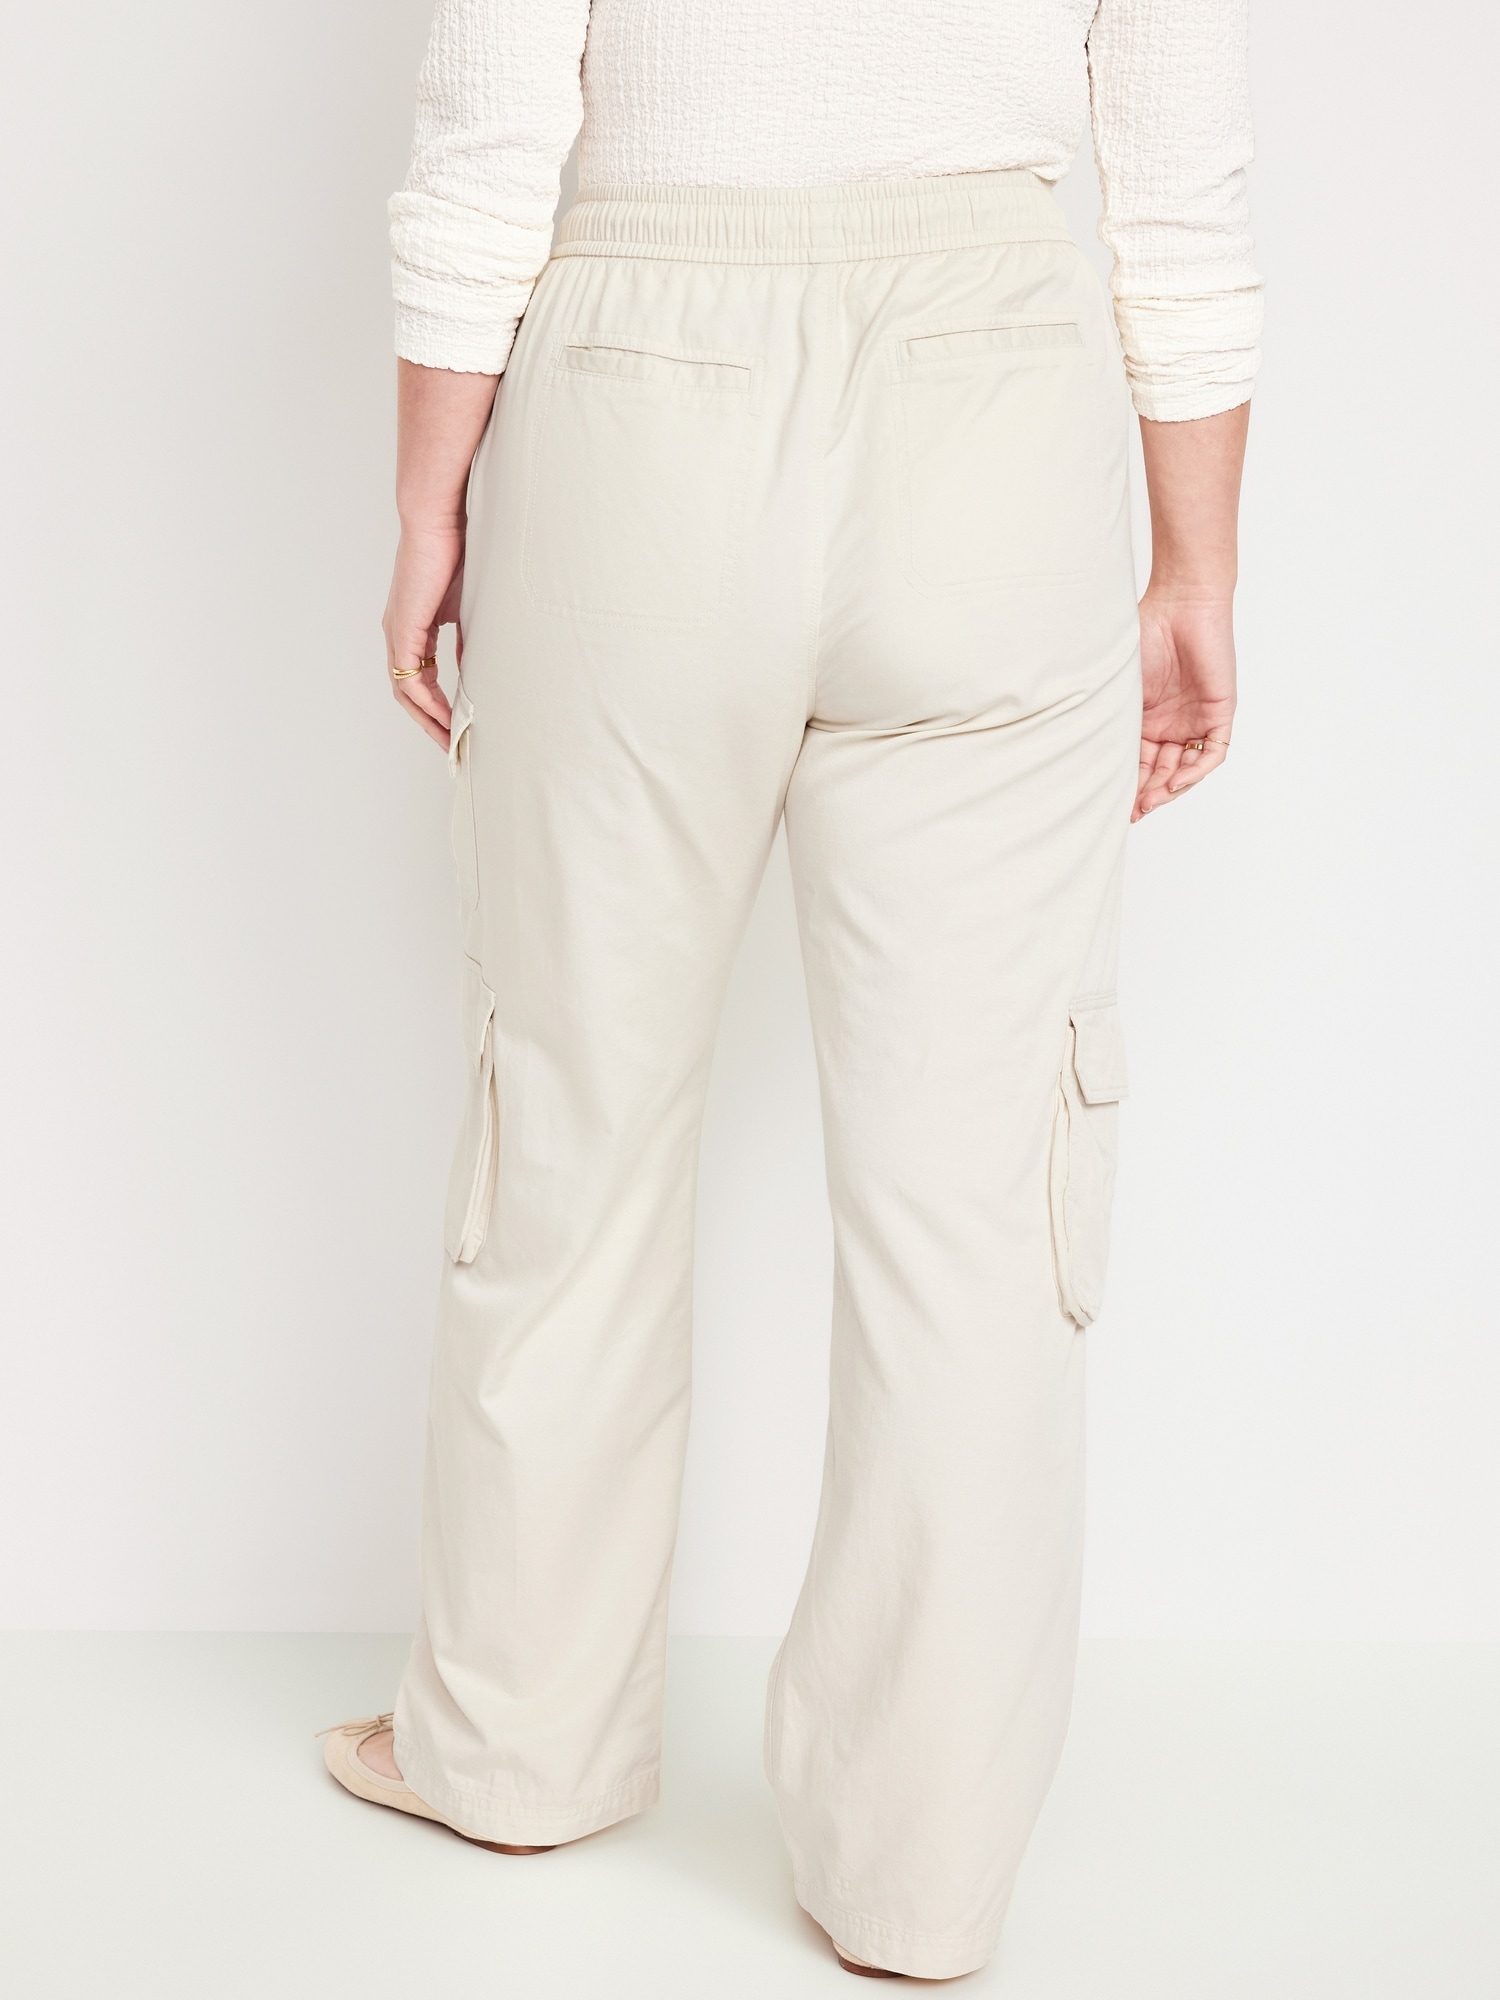 Whitecross 373 FIT Women's Cargo Comfortable Pants